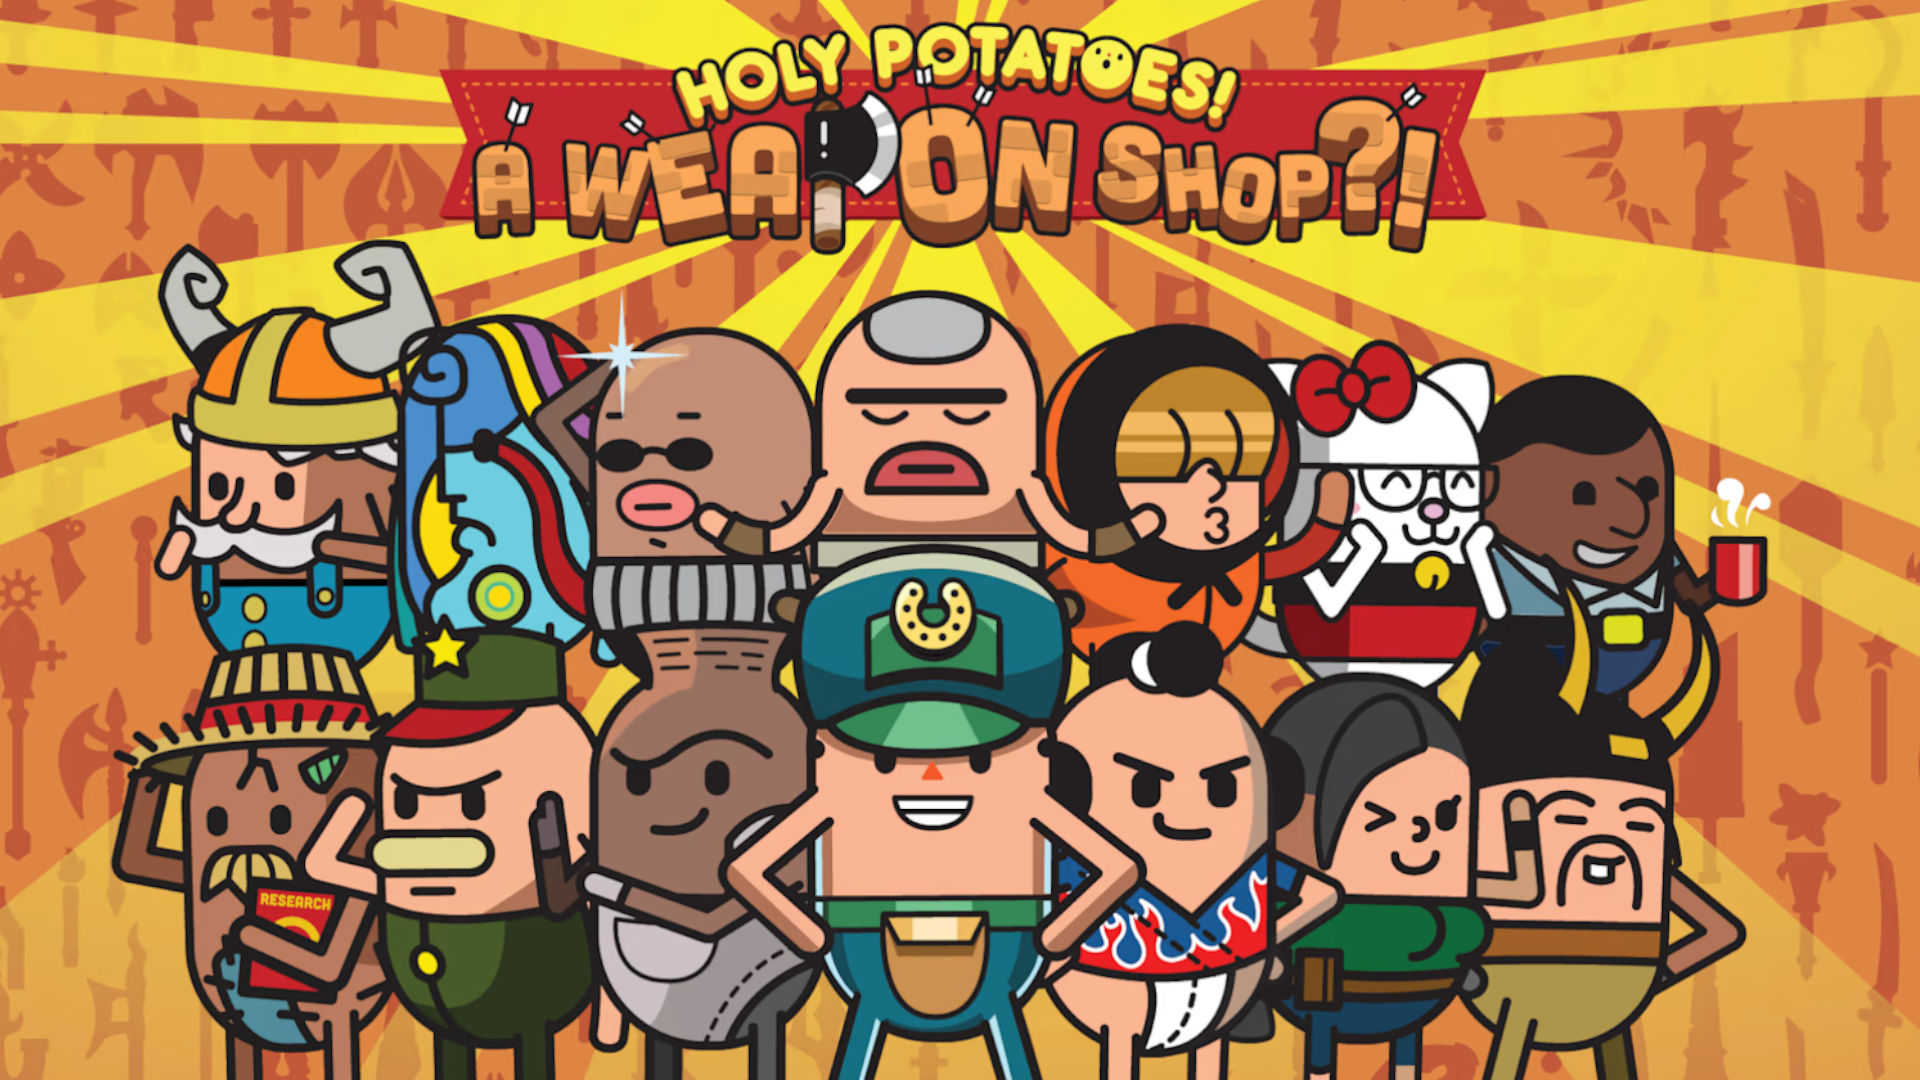 Holy Potatoes a weapon shop cover art